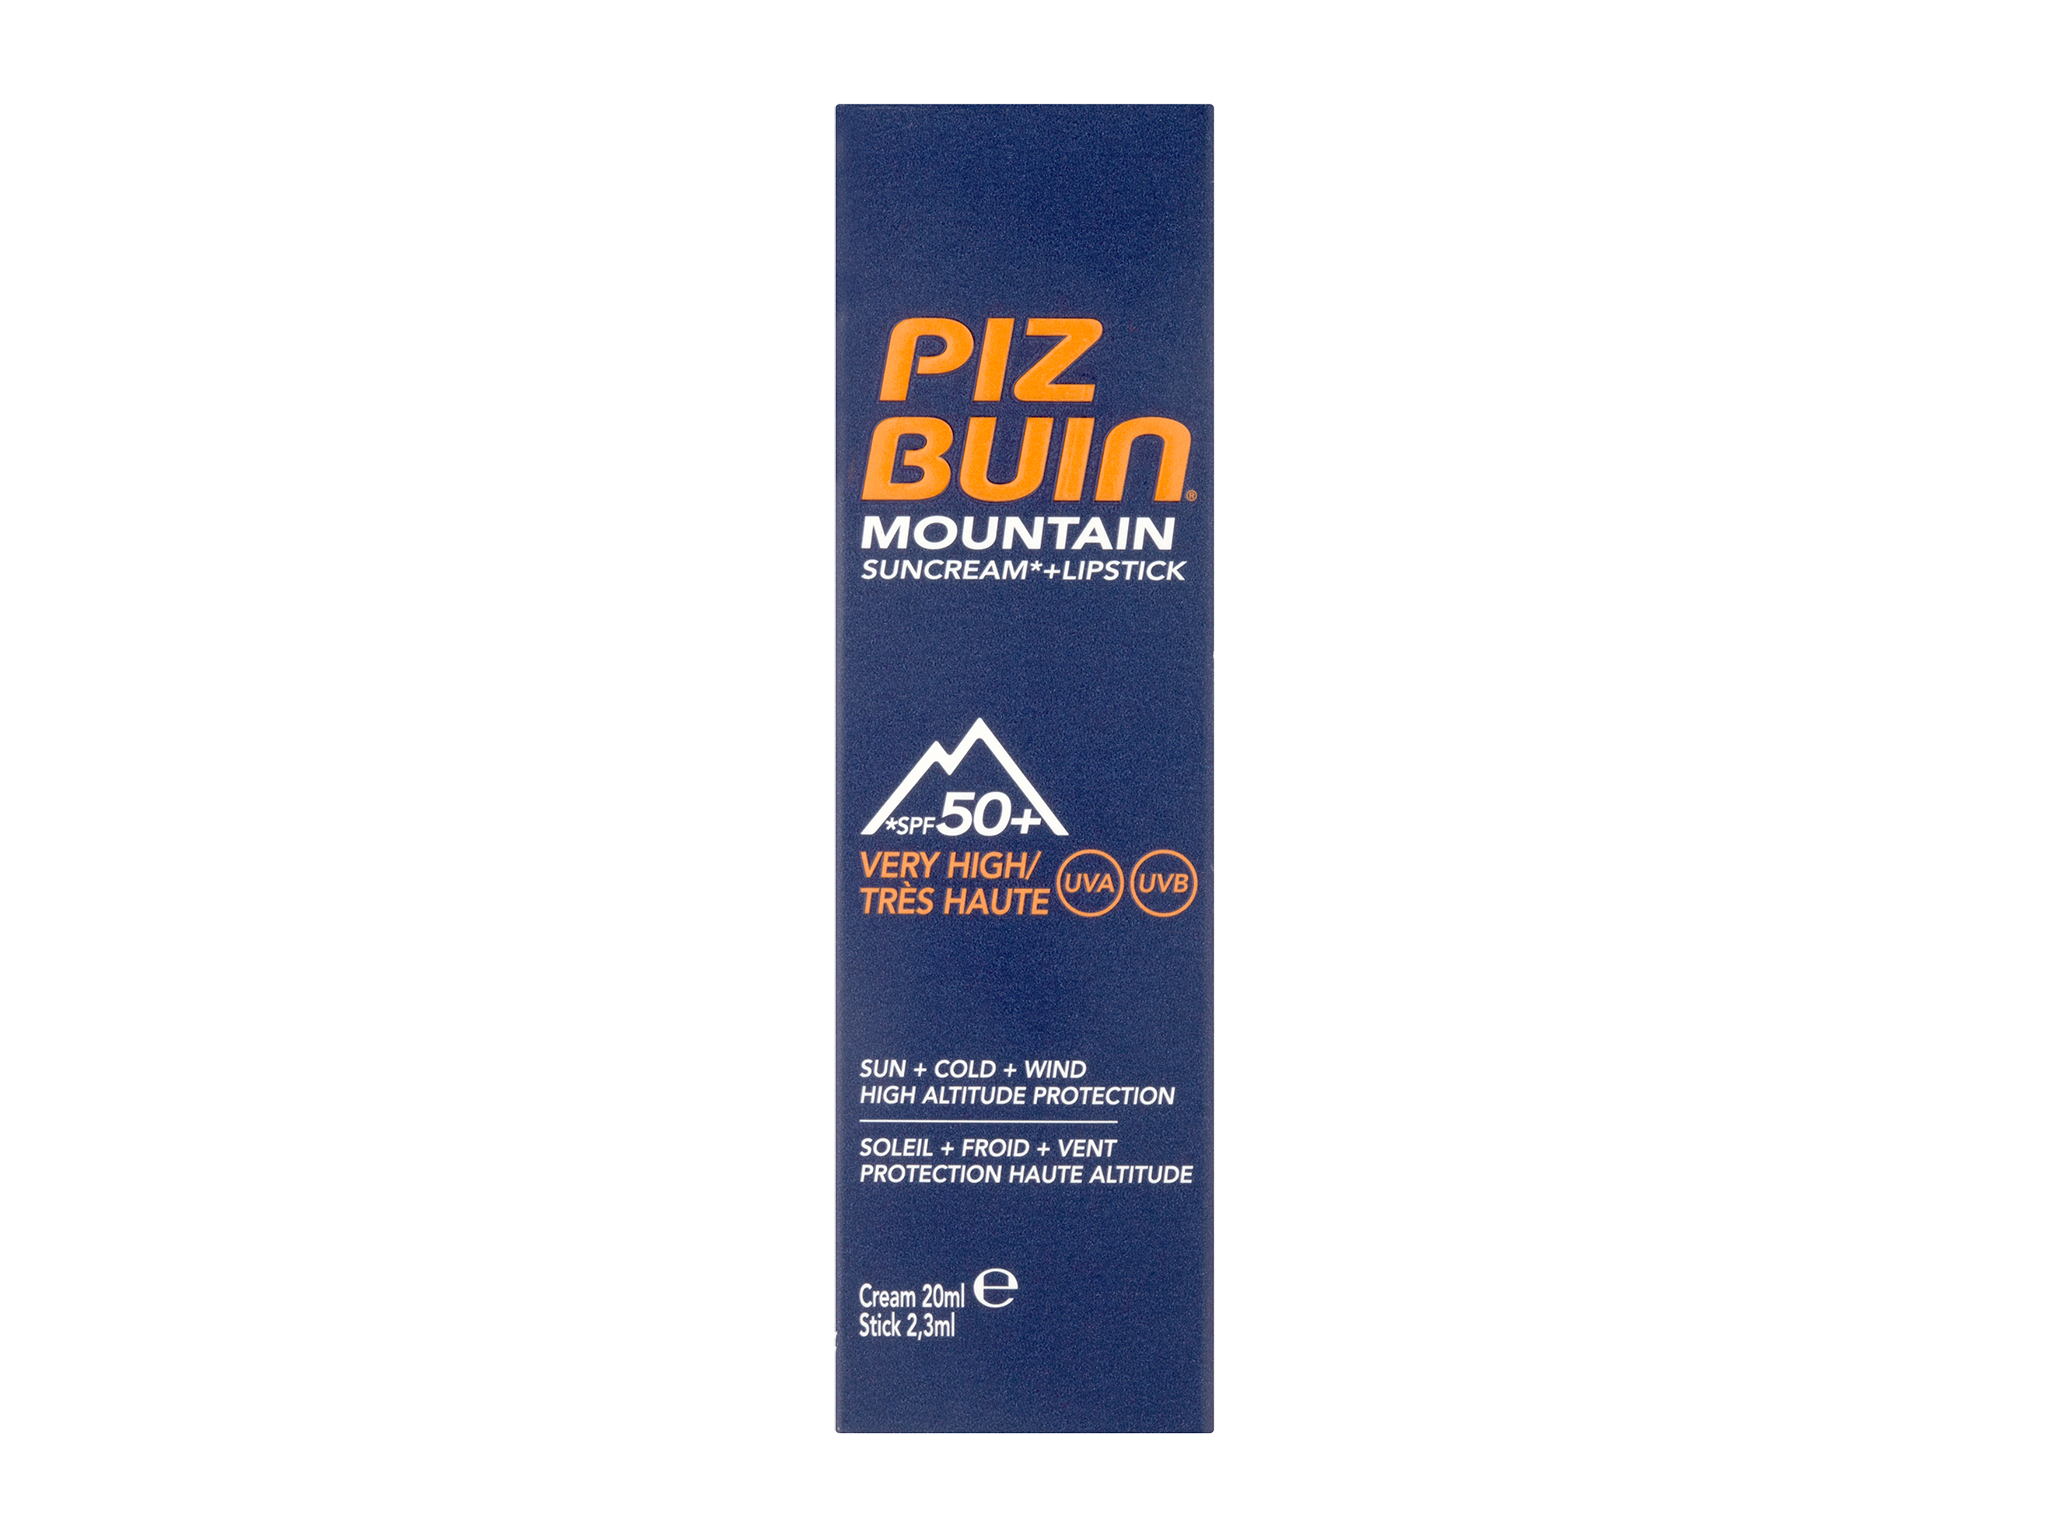 Piz Buin mountain suncream and lipstick